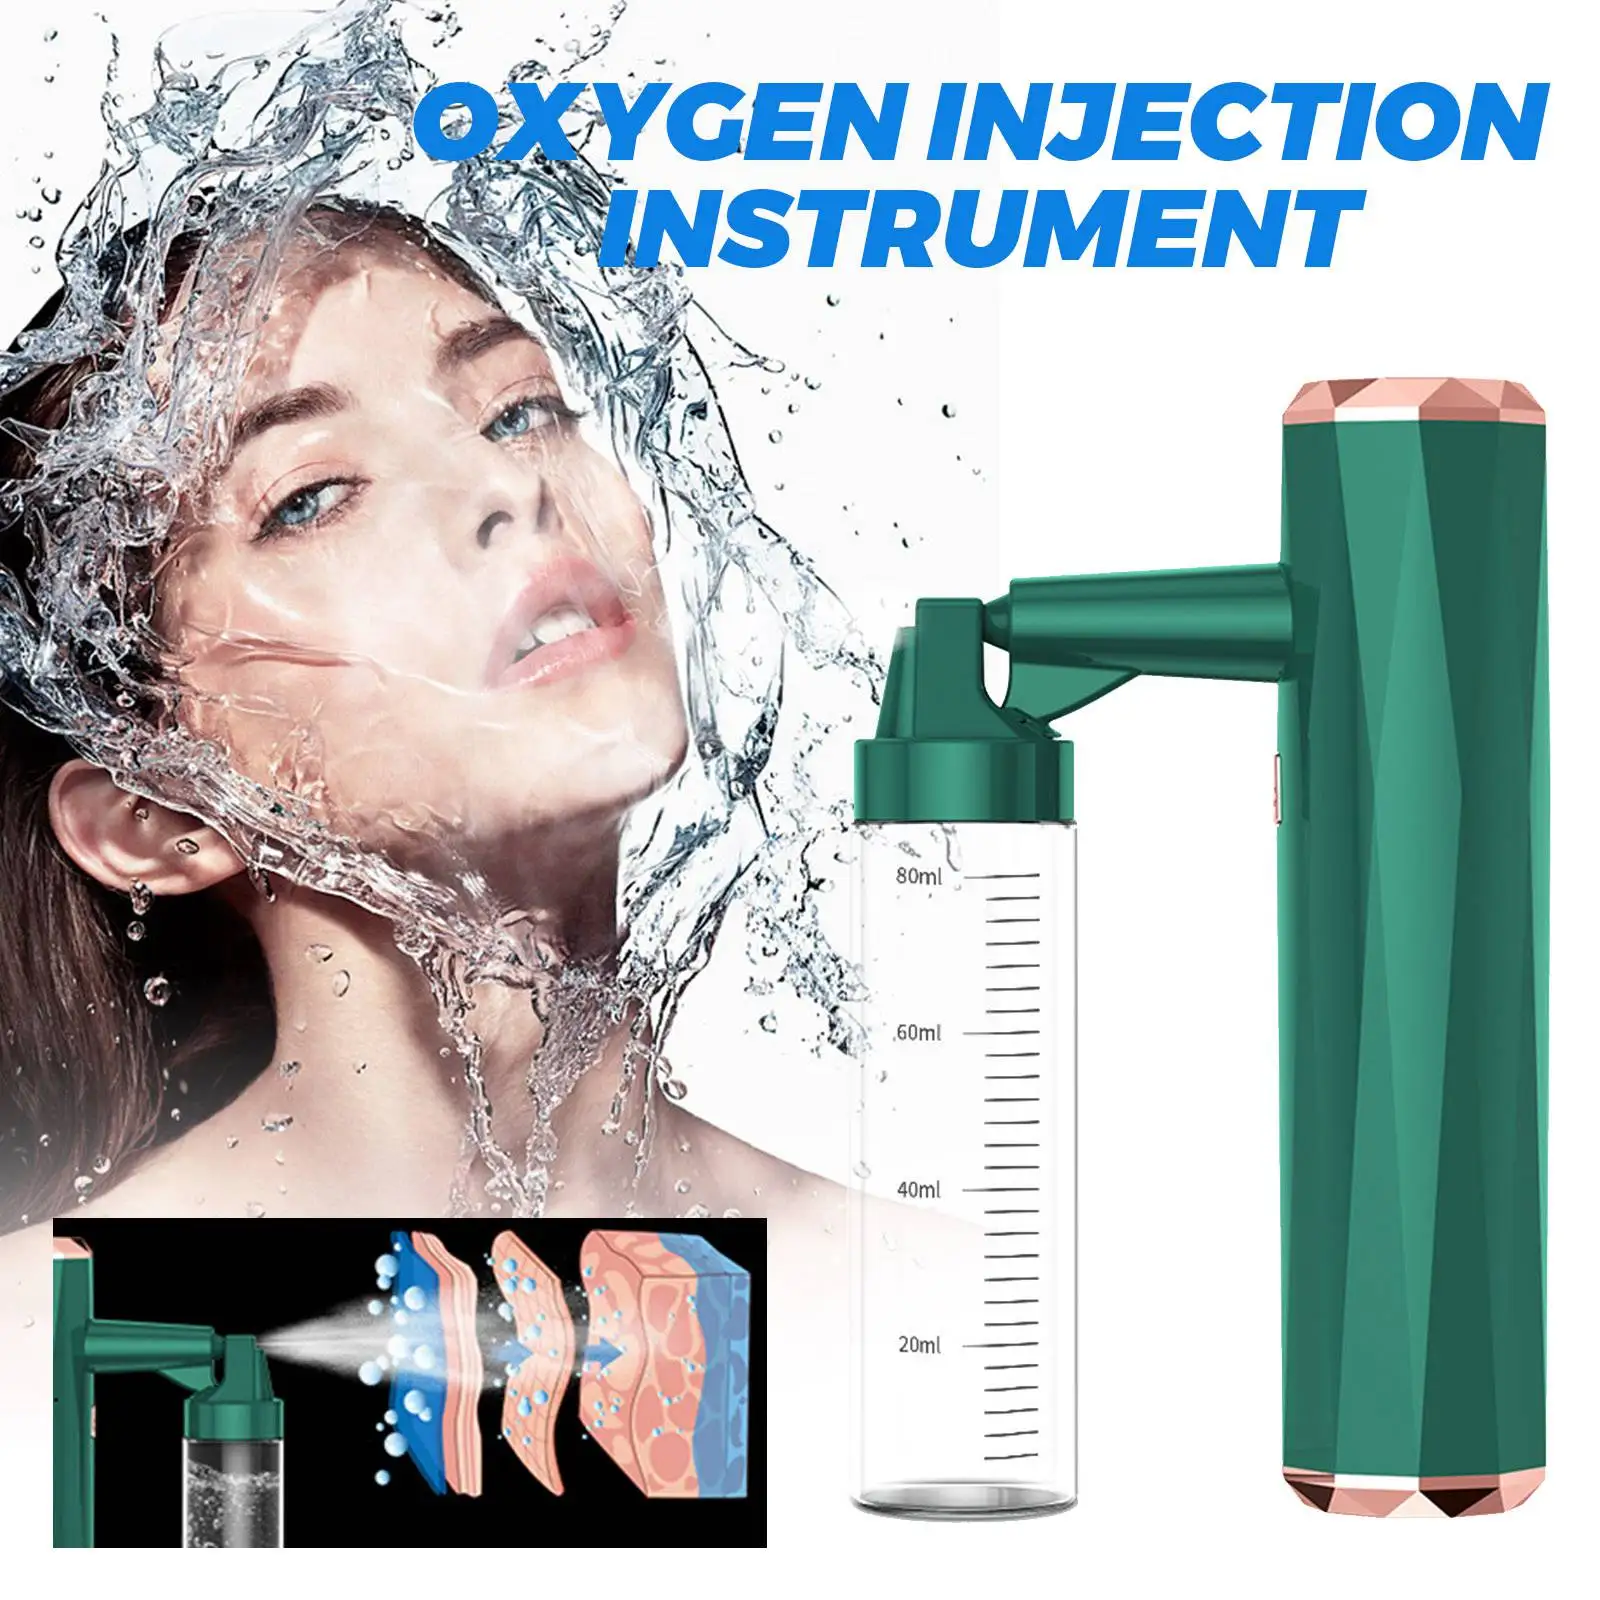 

USB Handheld Spray Bottle Portable Hydrating Mist Sprayer Facial Moisturizer Water Replenishment and Oxygen Injection Instrument